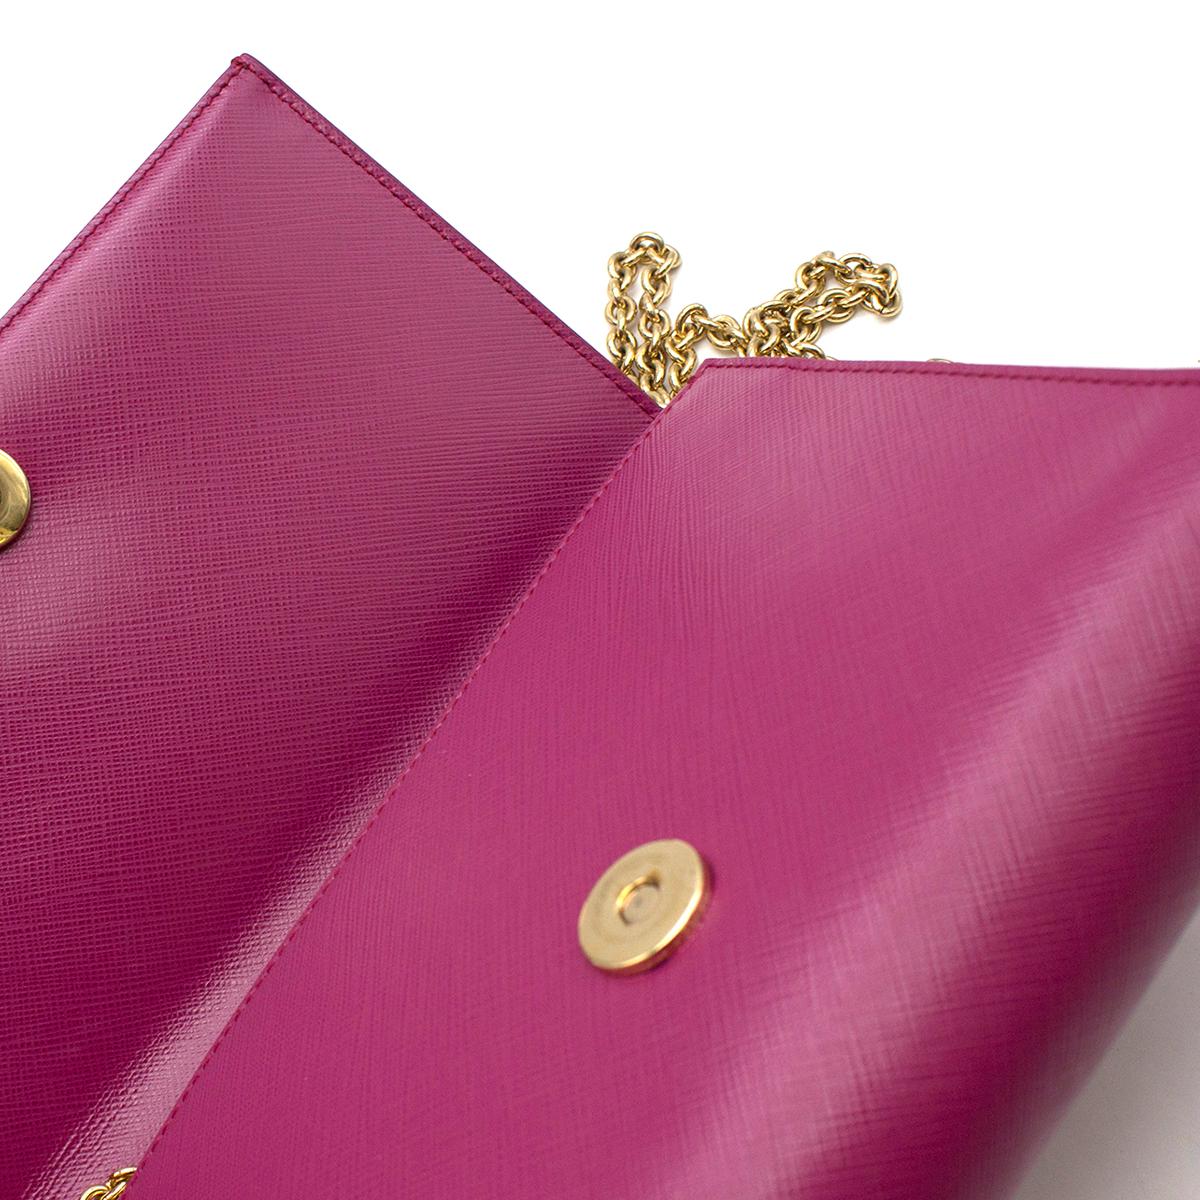 Salvatore Ferragamo Pink Leather Medium Ginny Shoulder Bag 2